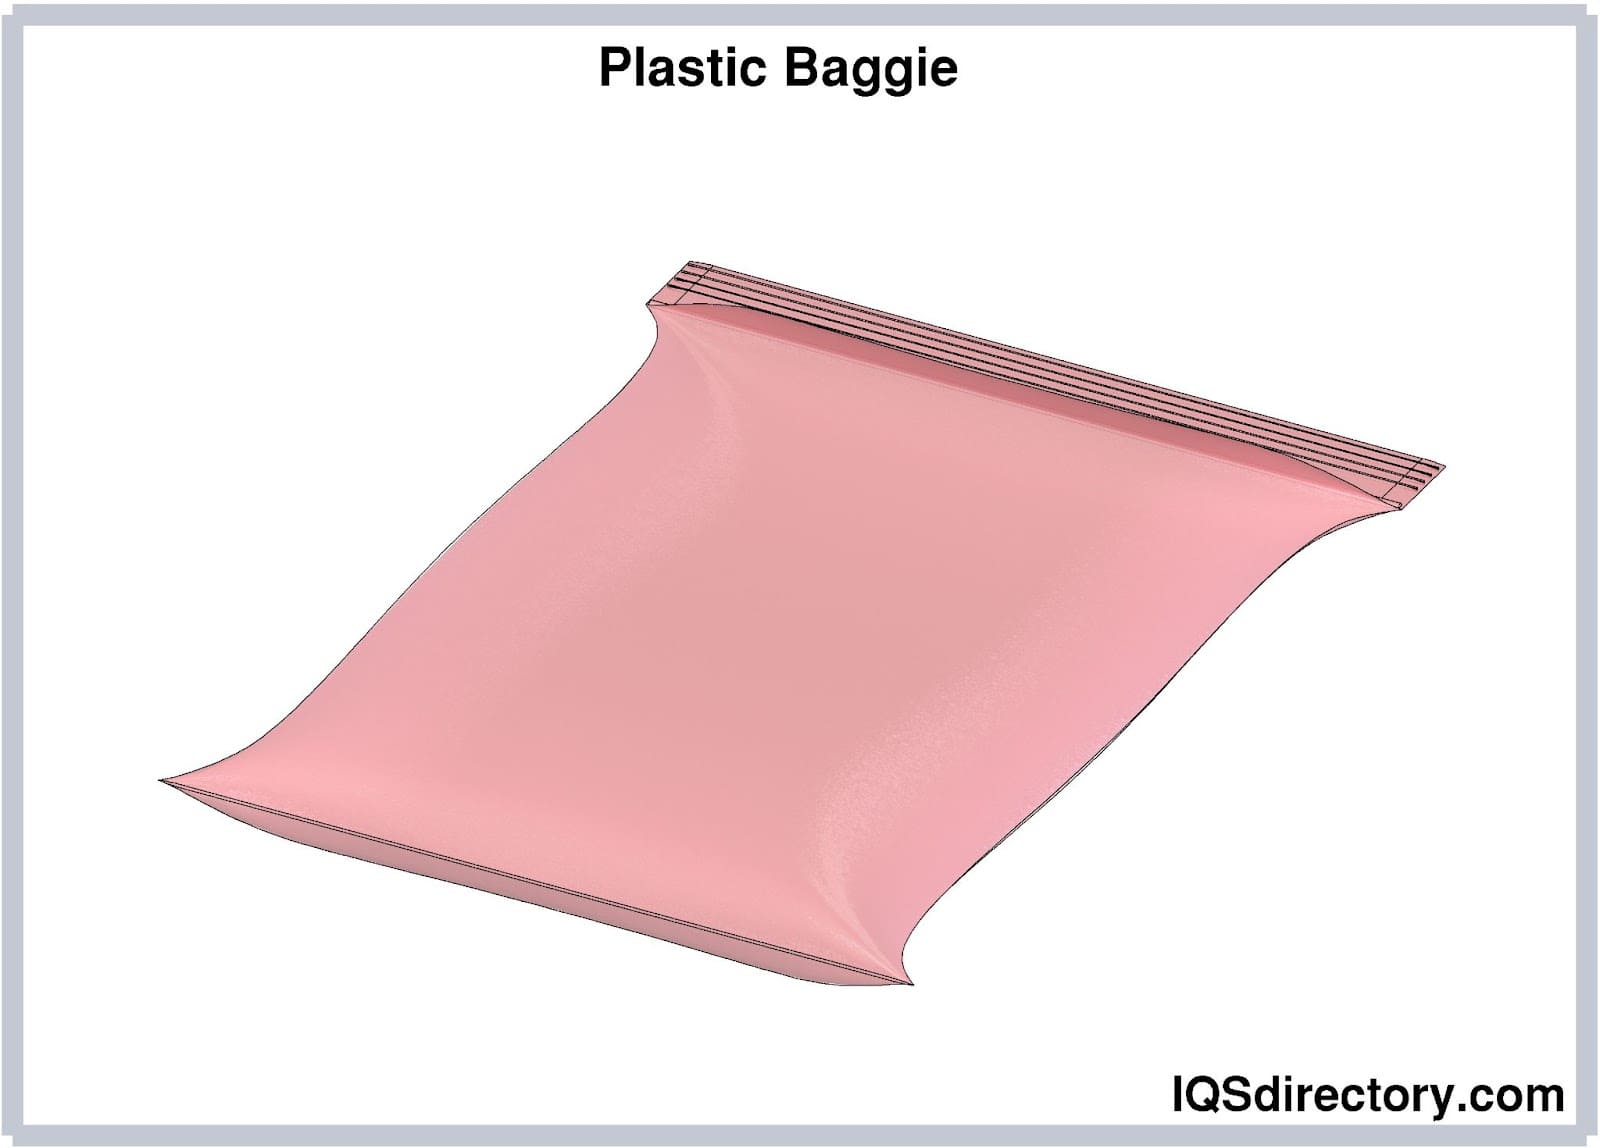 https://www.iqsdirectory.com/articles/plastic-bag/plastic-baggies/plastic-baggie.jpg